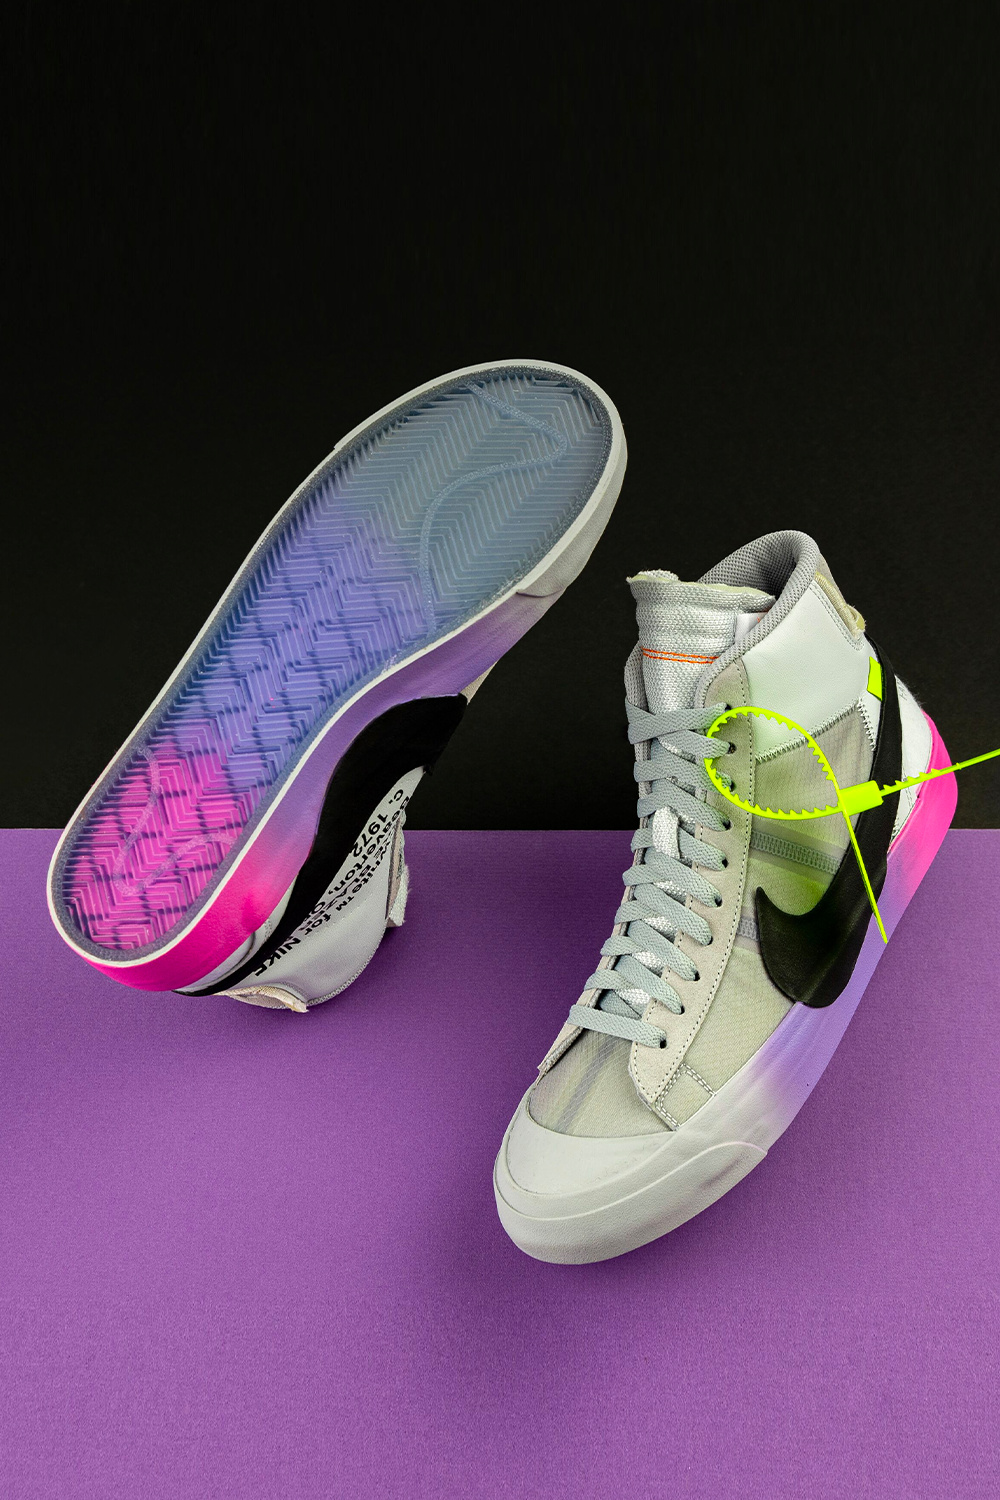 Off White X Nike Blazer Mid Queen. Hype Shoes, Sneakers Fashion, Nike Blazer